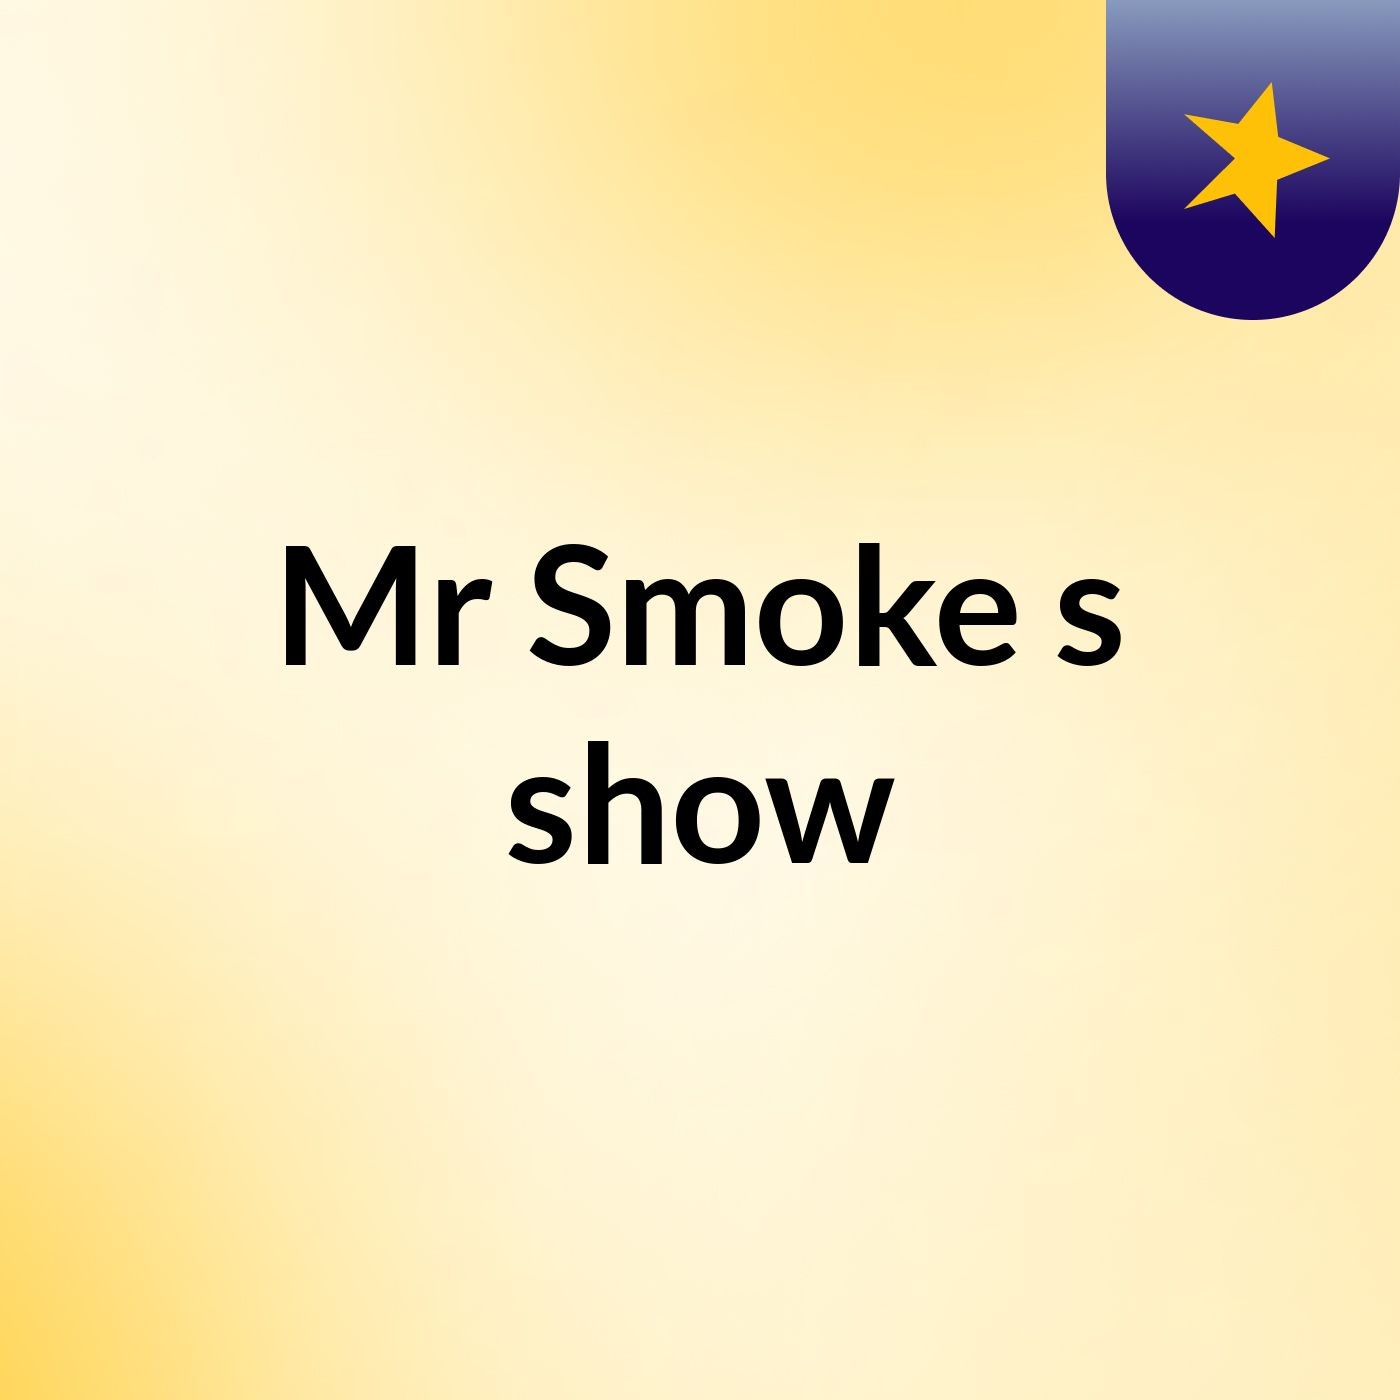 Mr Smoke's show